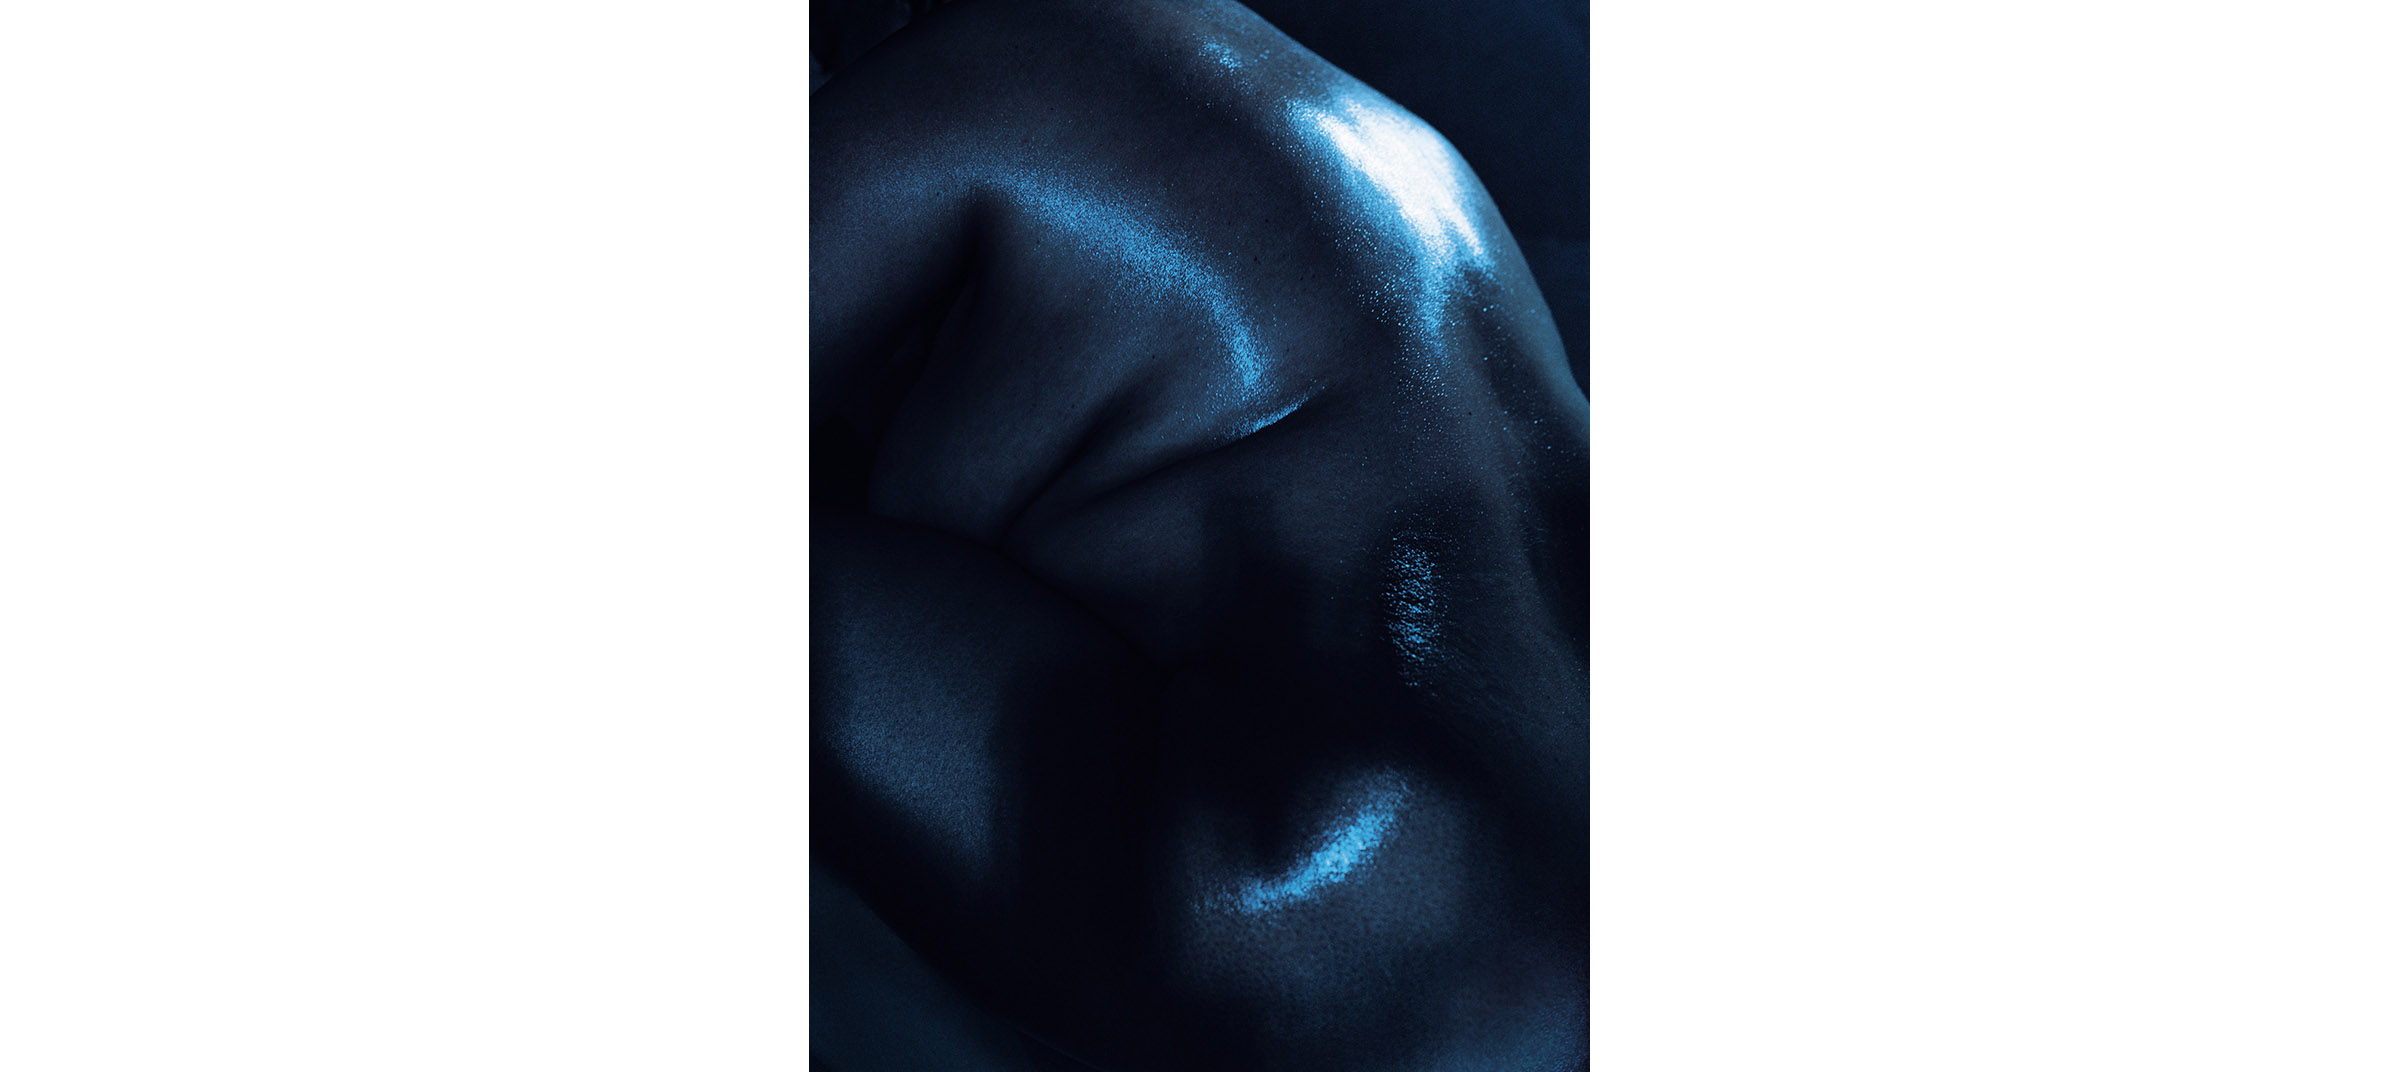   Blue Nudes  Untitled N°7, 2005 Tirage gélatino argentique, 144 x 104 cm | Gelatin silver print 56,59 x 40,94 inches  4/5 